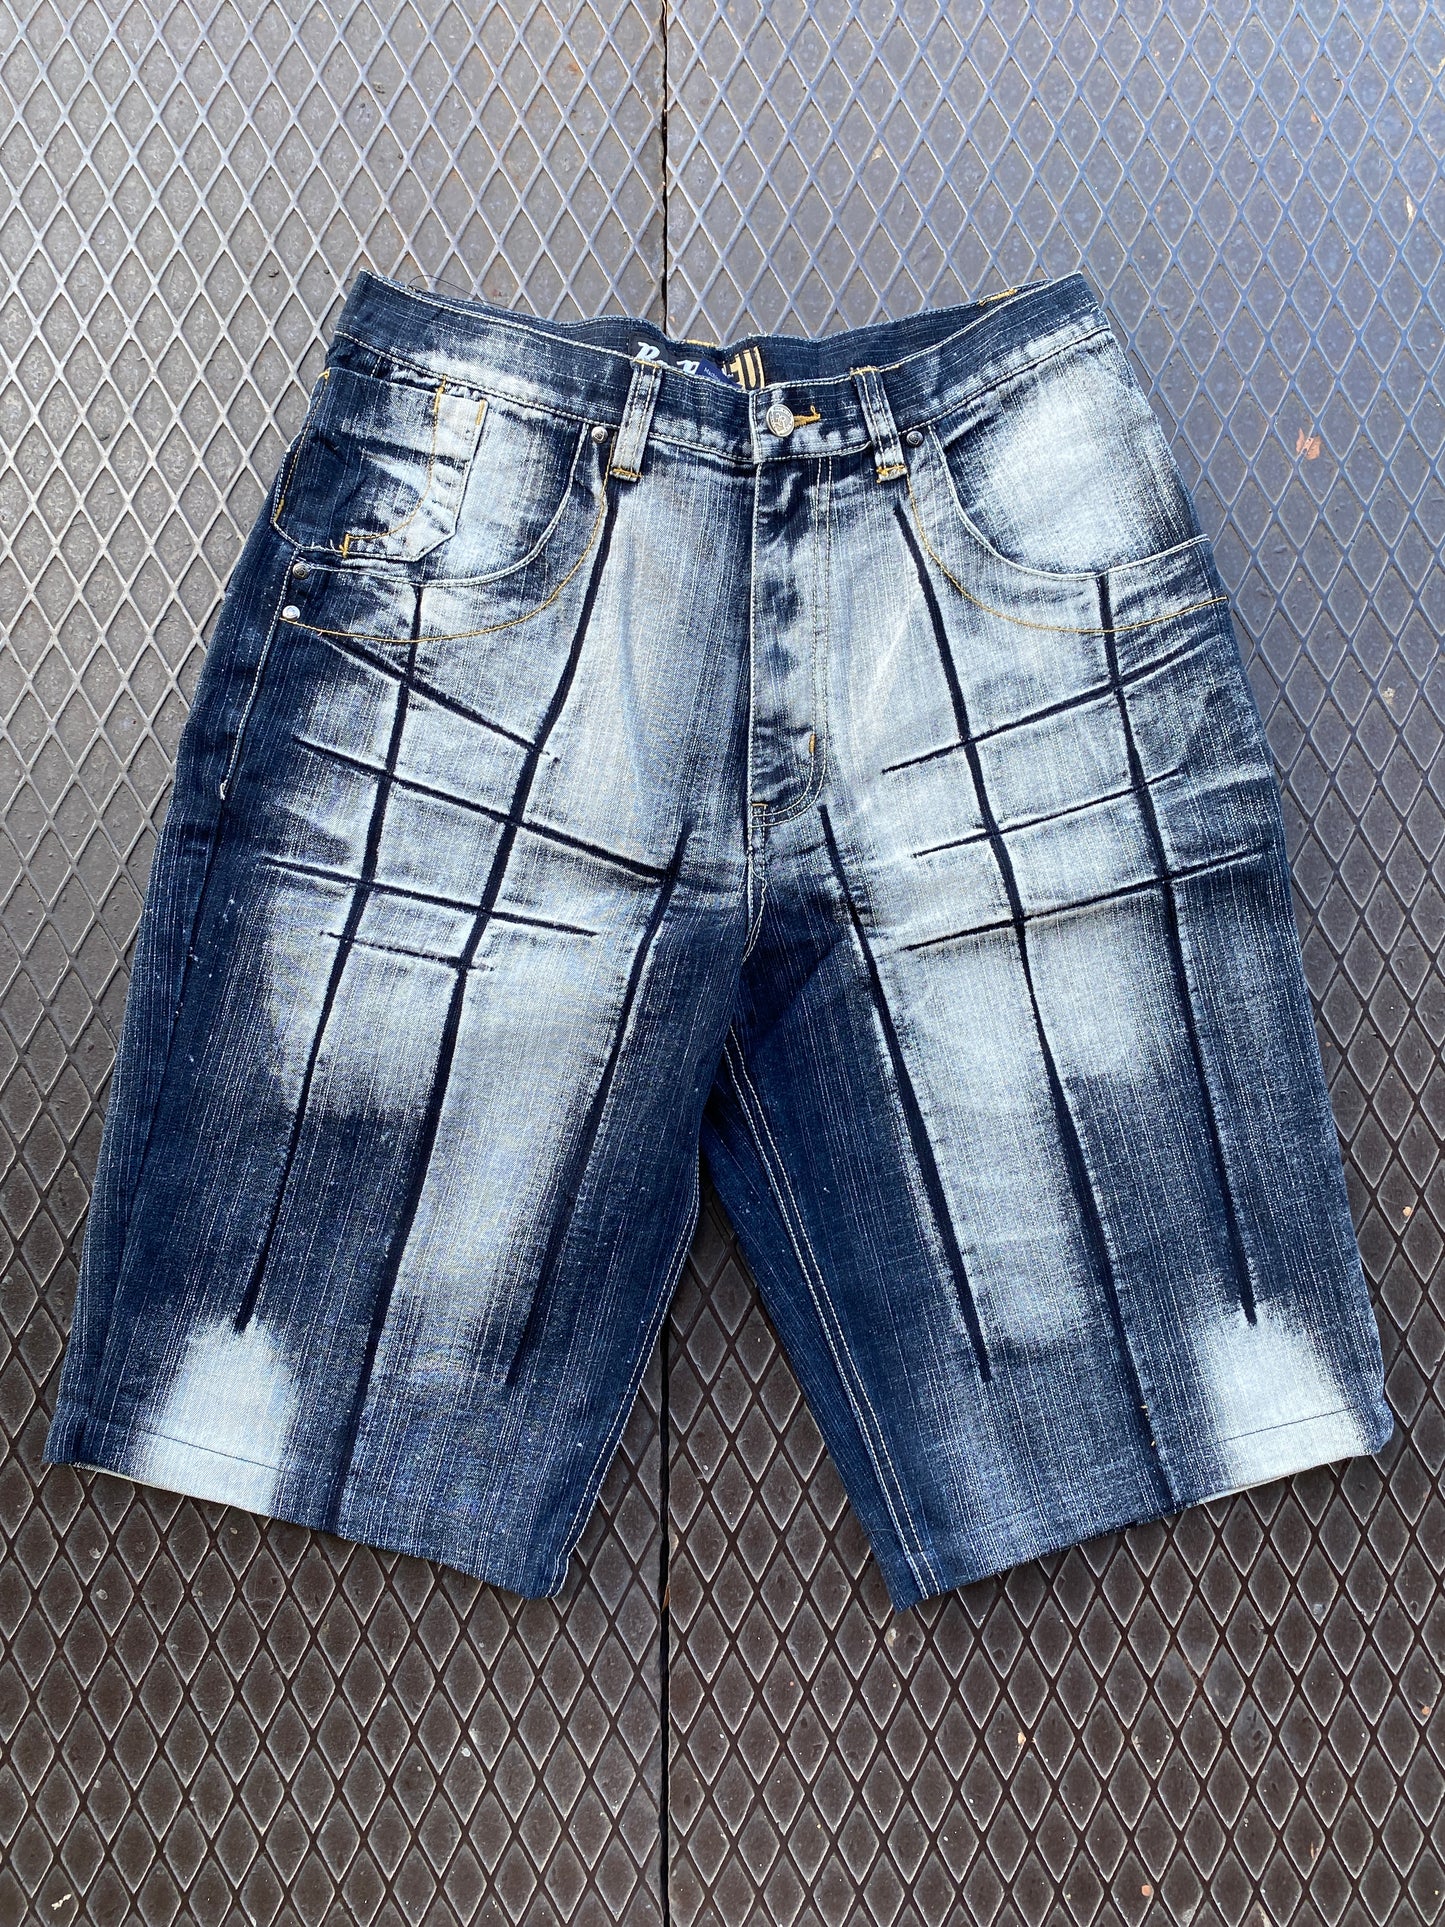 34 - Raw Blue Dark Denim Shorts with White Hatched Patterning